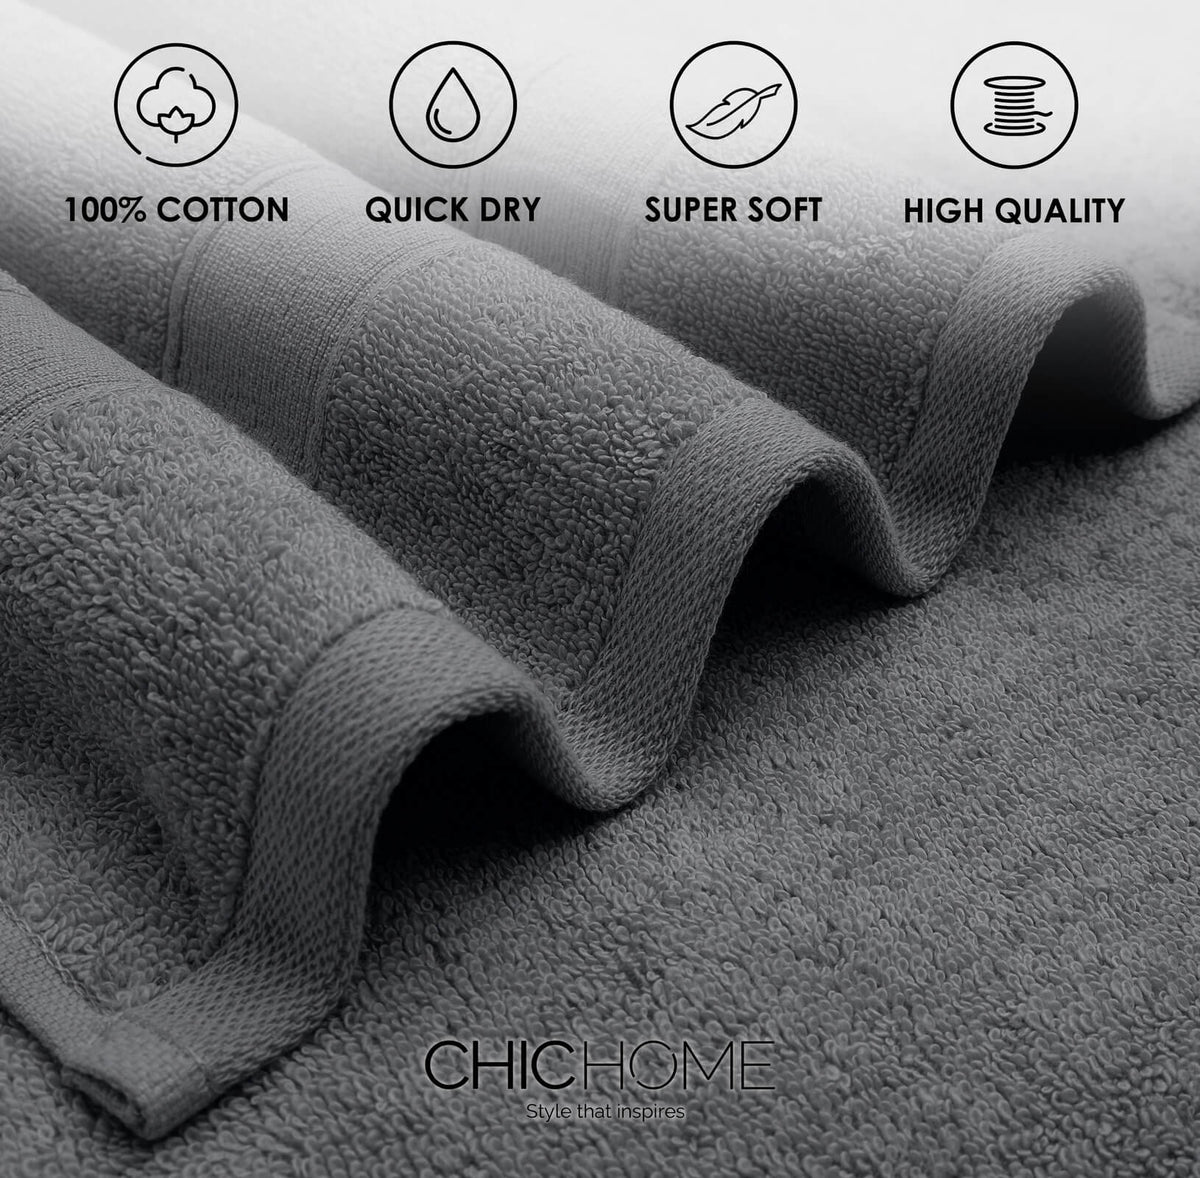 Chic Home Dobby Border Turkish Cotton 4 Piece Bath Towel Set-Charcoal